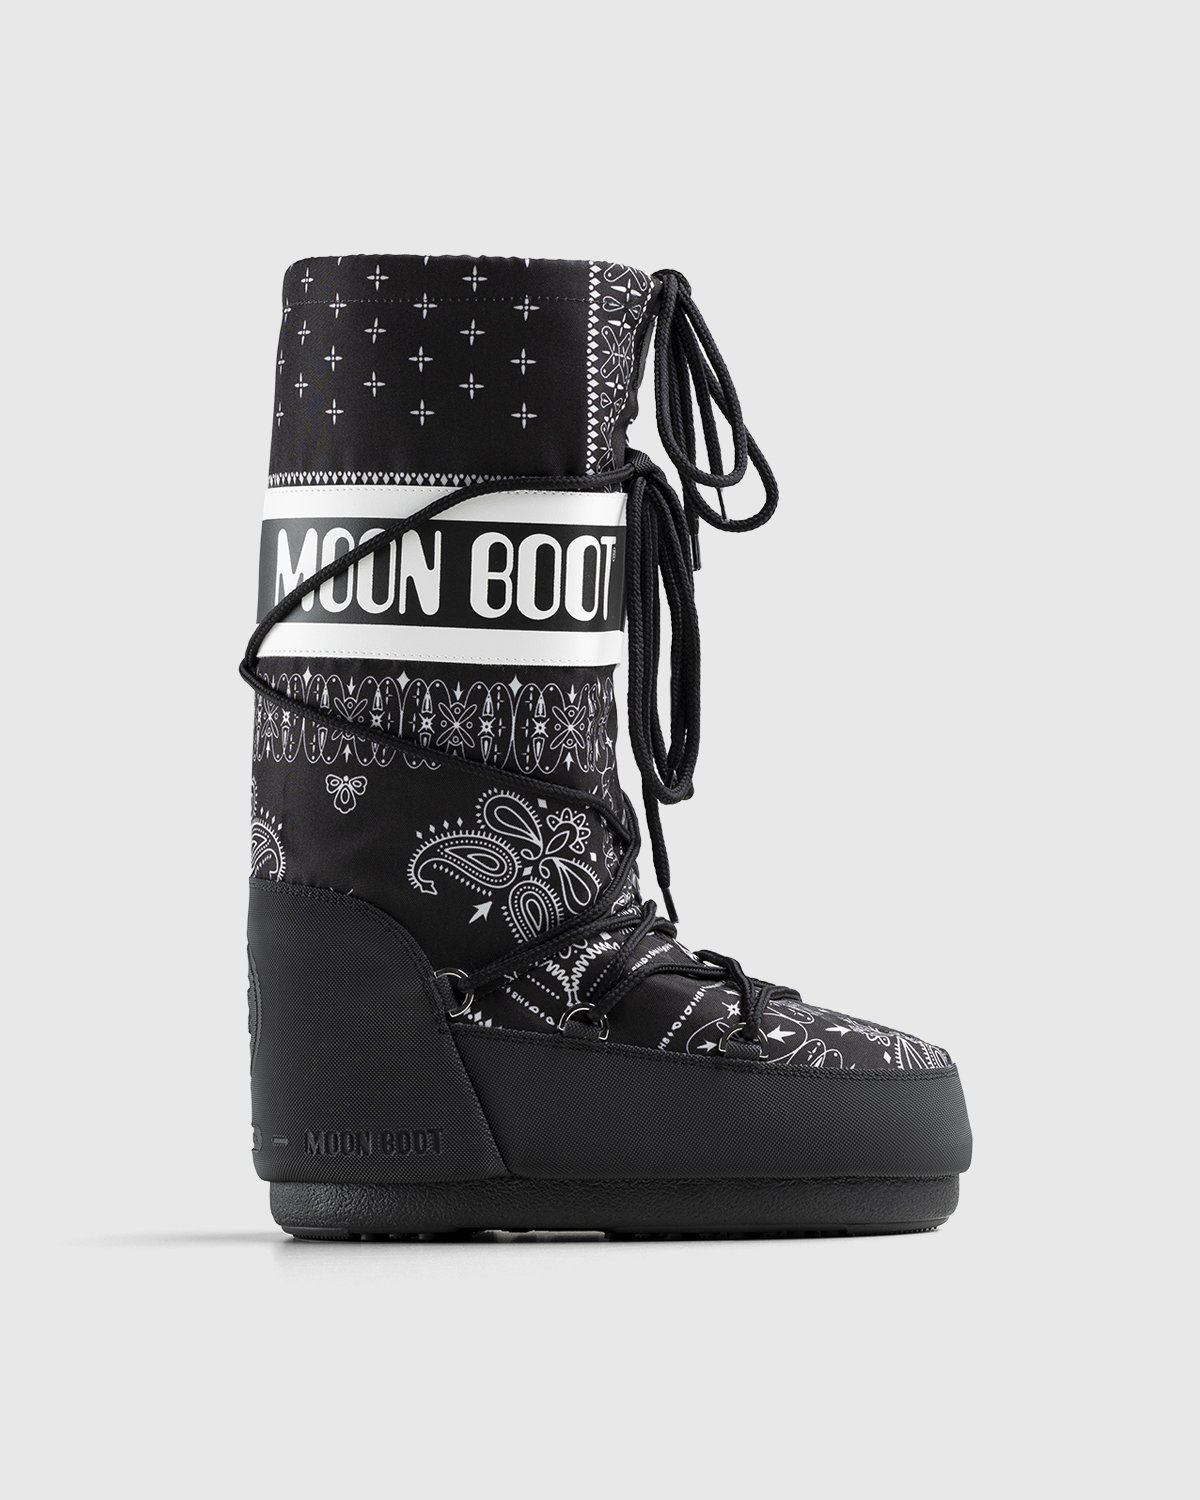 Moon Boot Nylon Icon snowboots in black